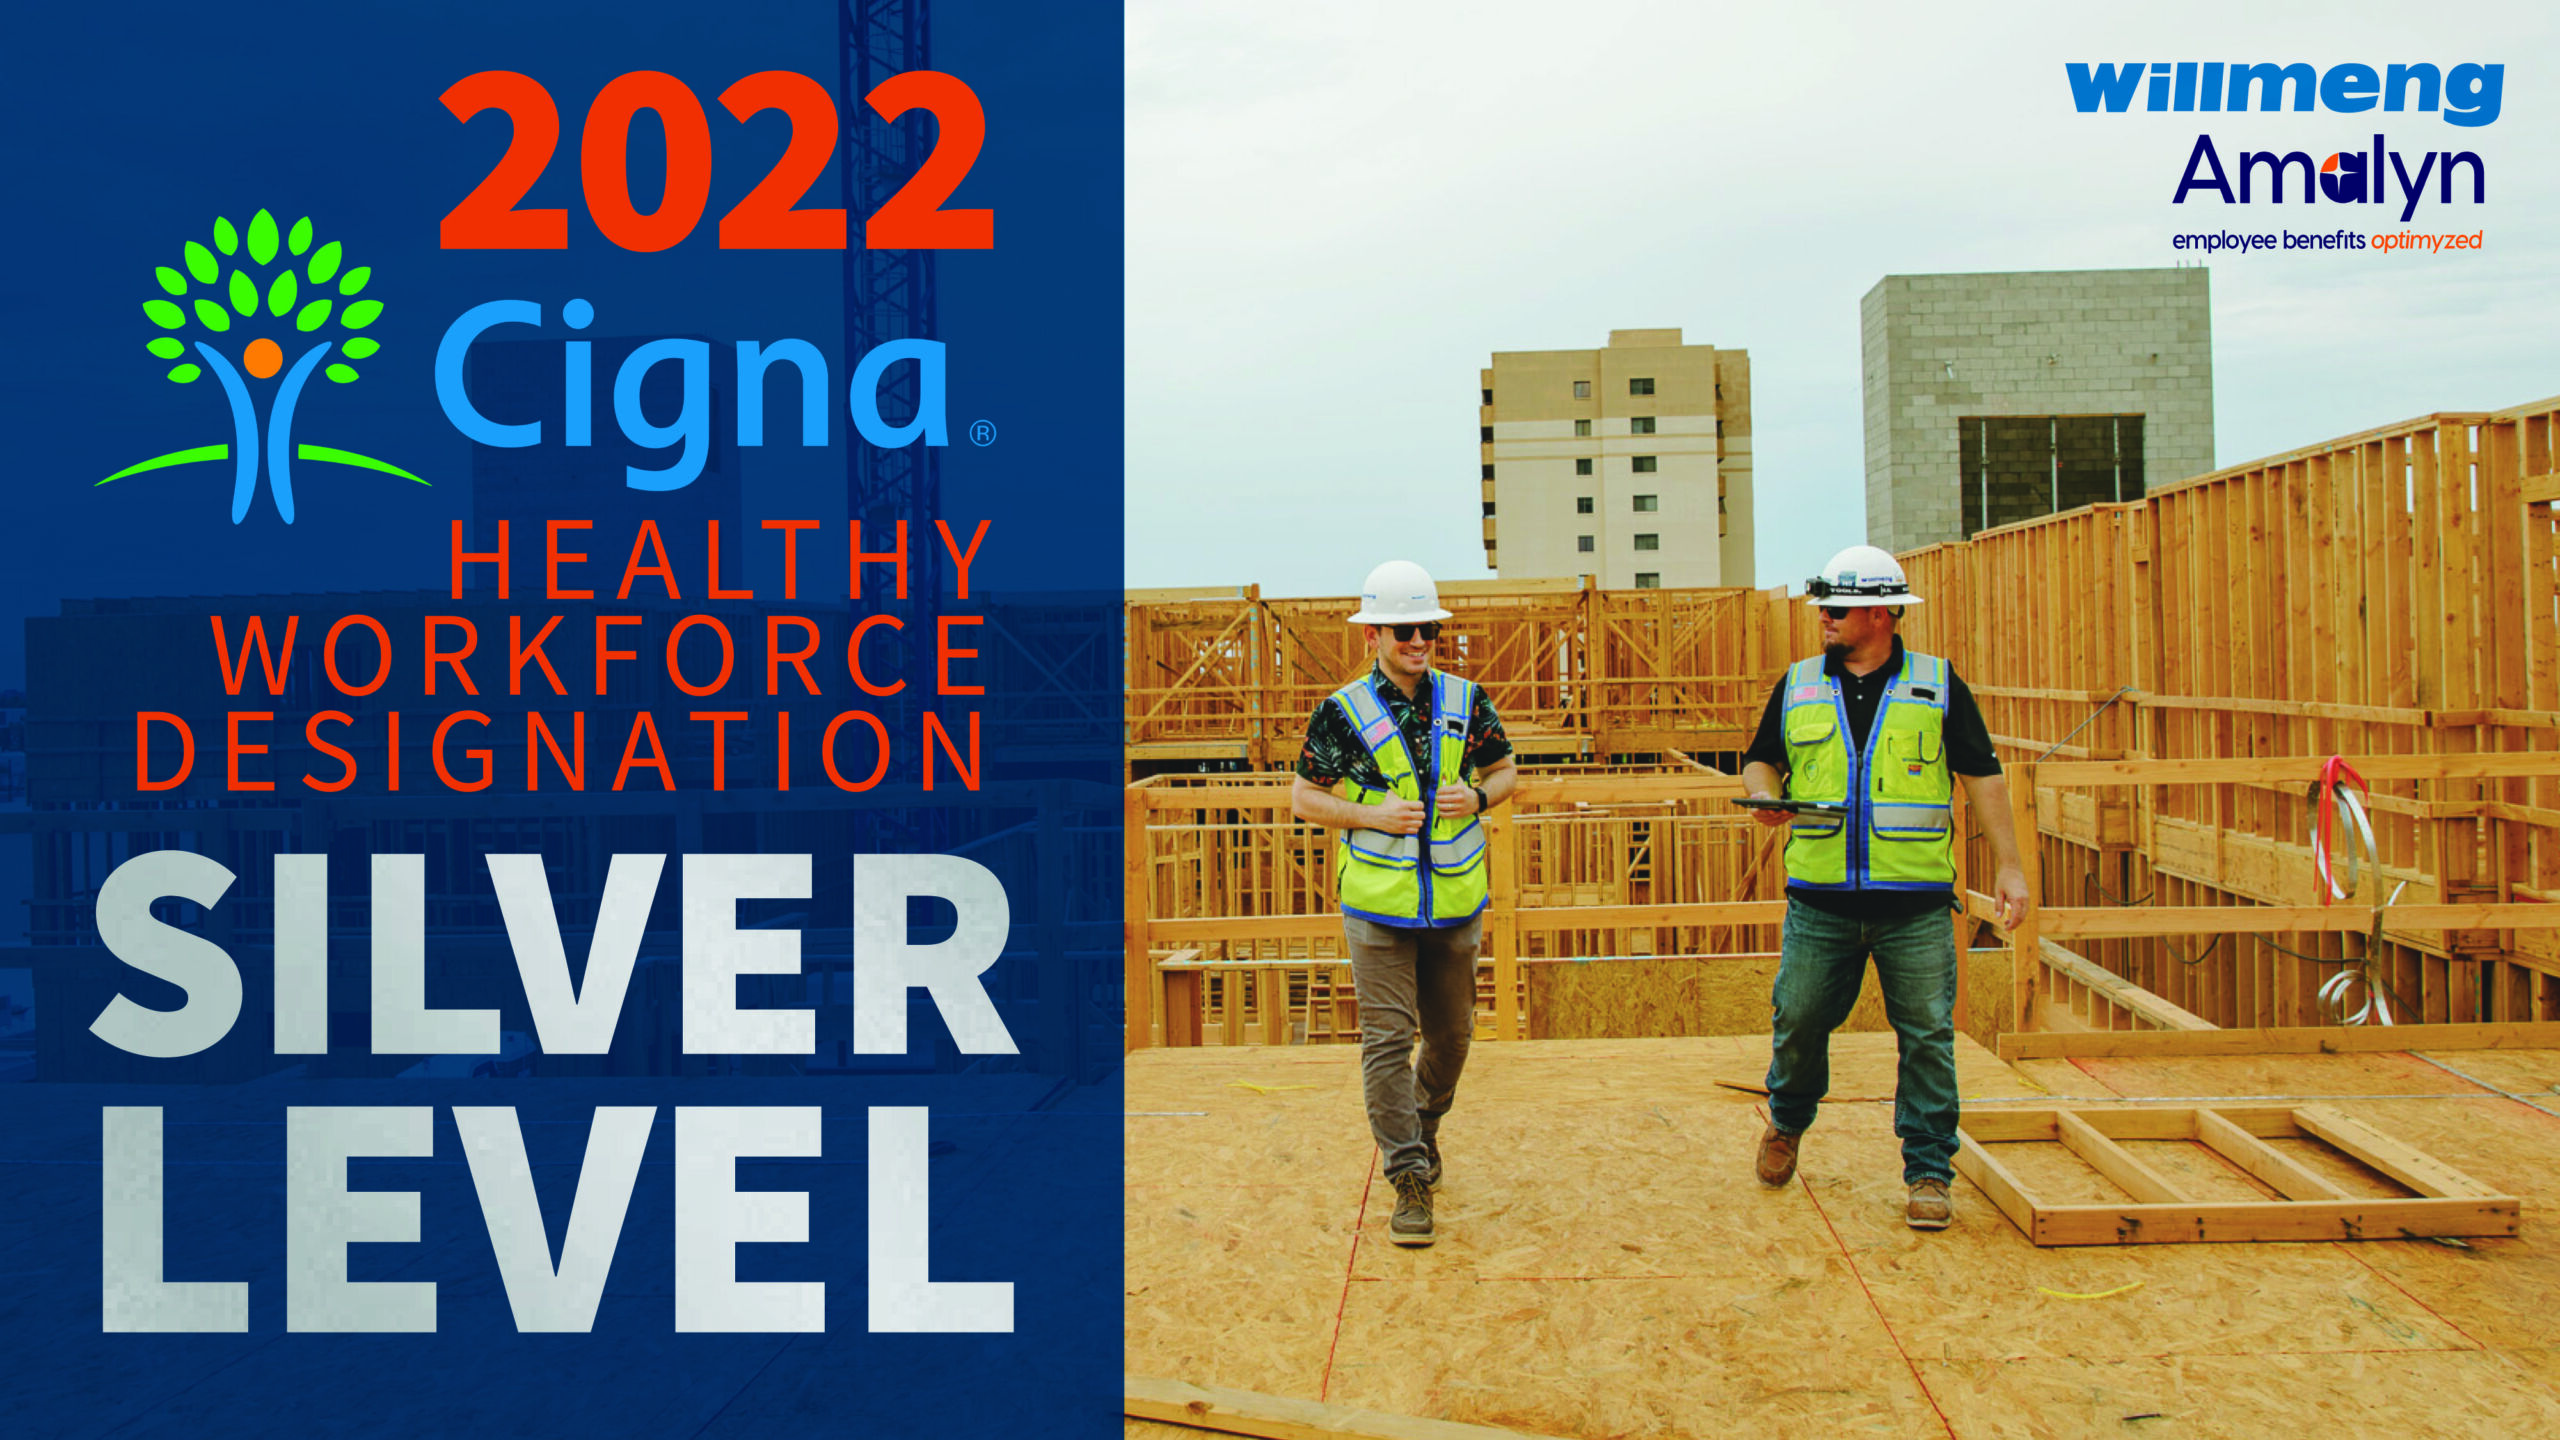 2022 Cigna Healthy Workforce designation